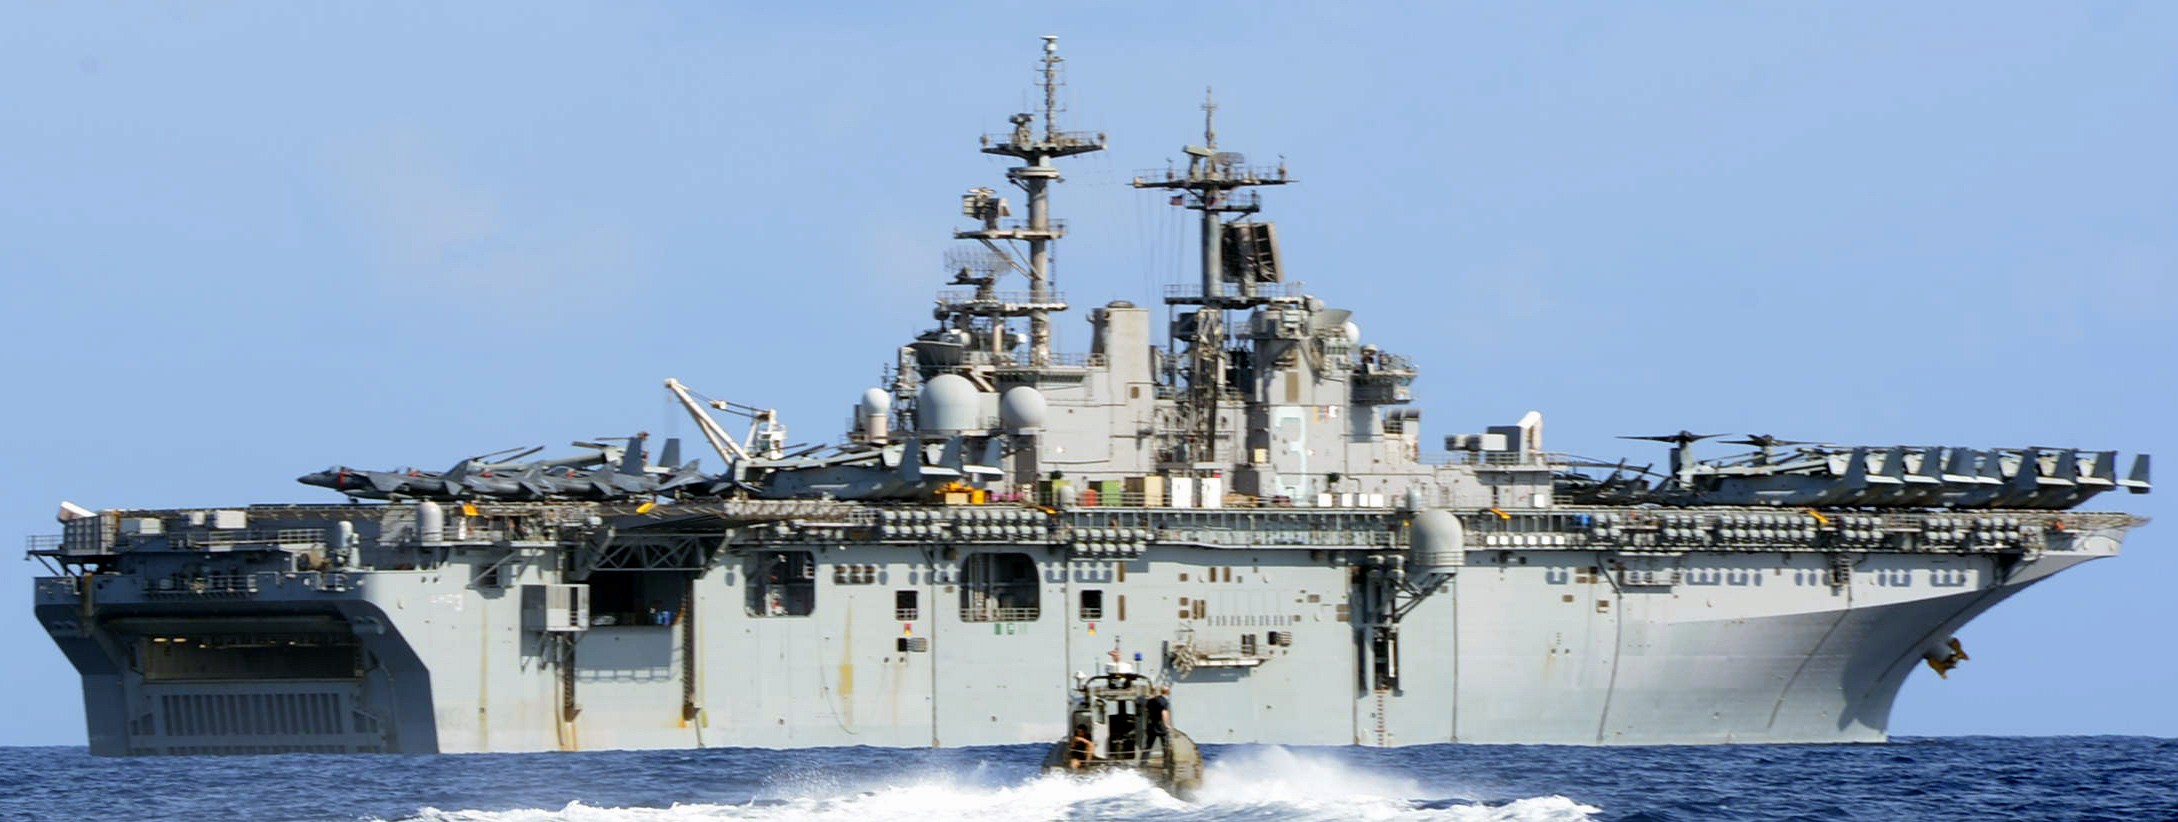 lhd-3 uss kearsarge wasp class amphibious assault ship us navy marines vmm-266 103